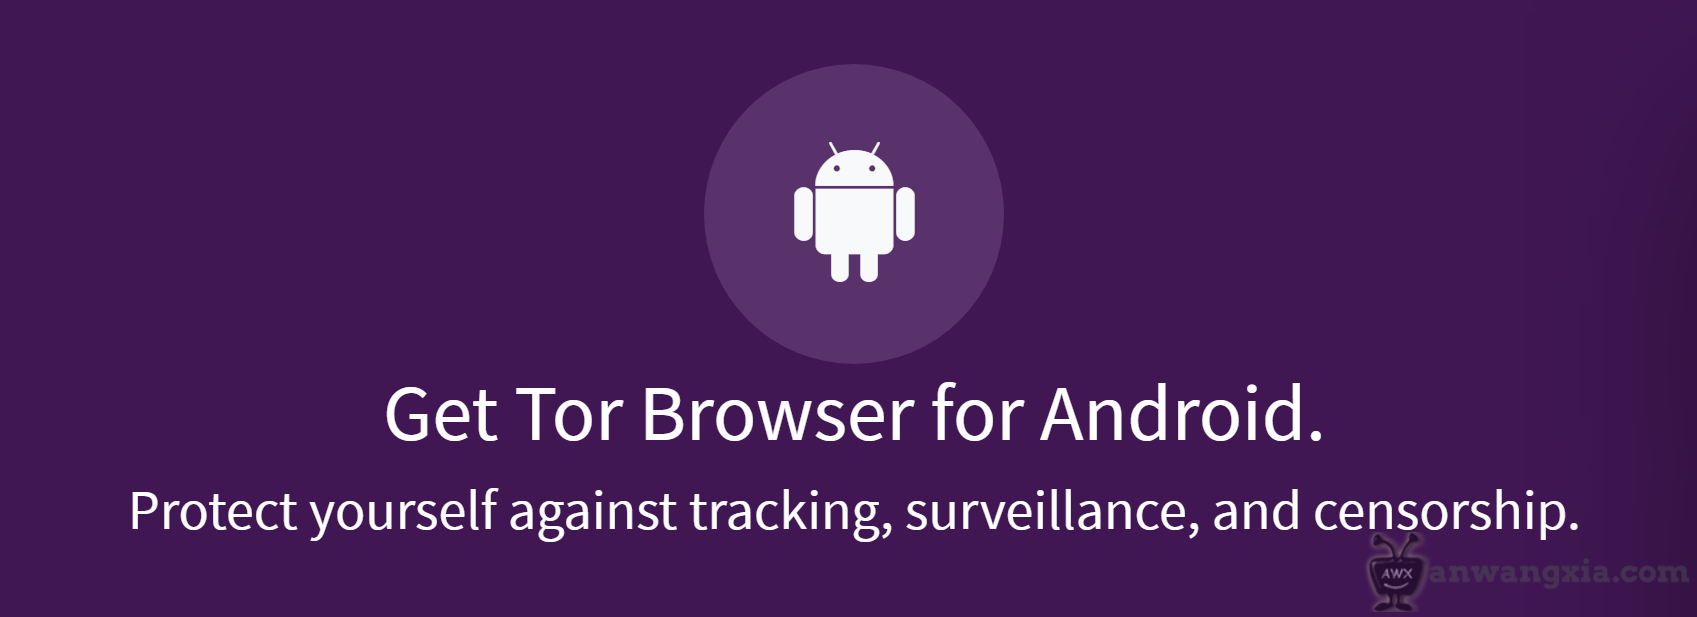 Tor browser video download hyrda подключение тор браузера вход на гидру